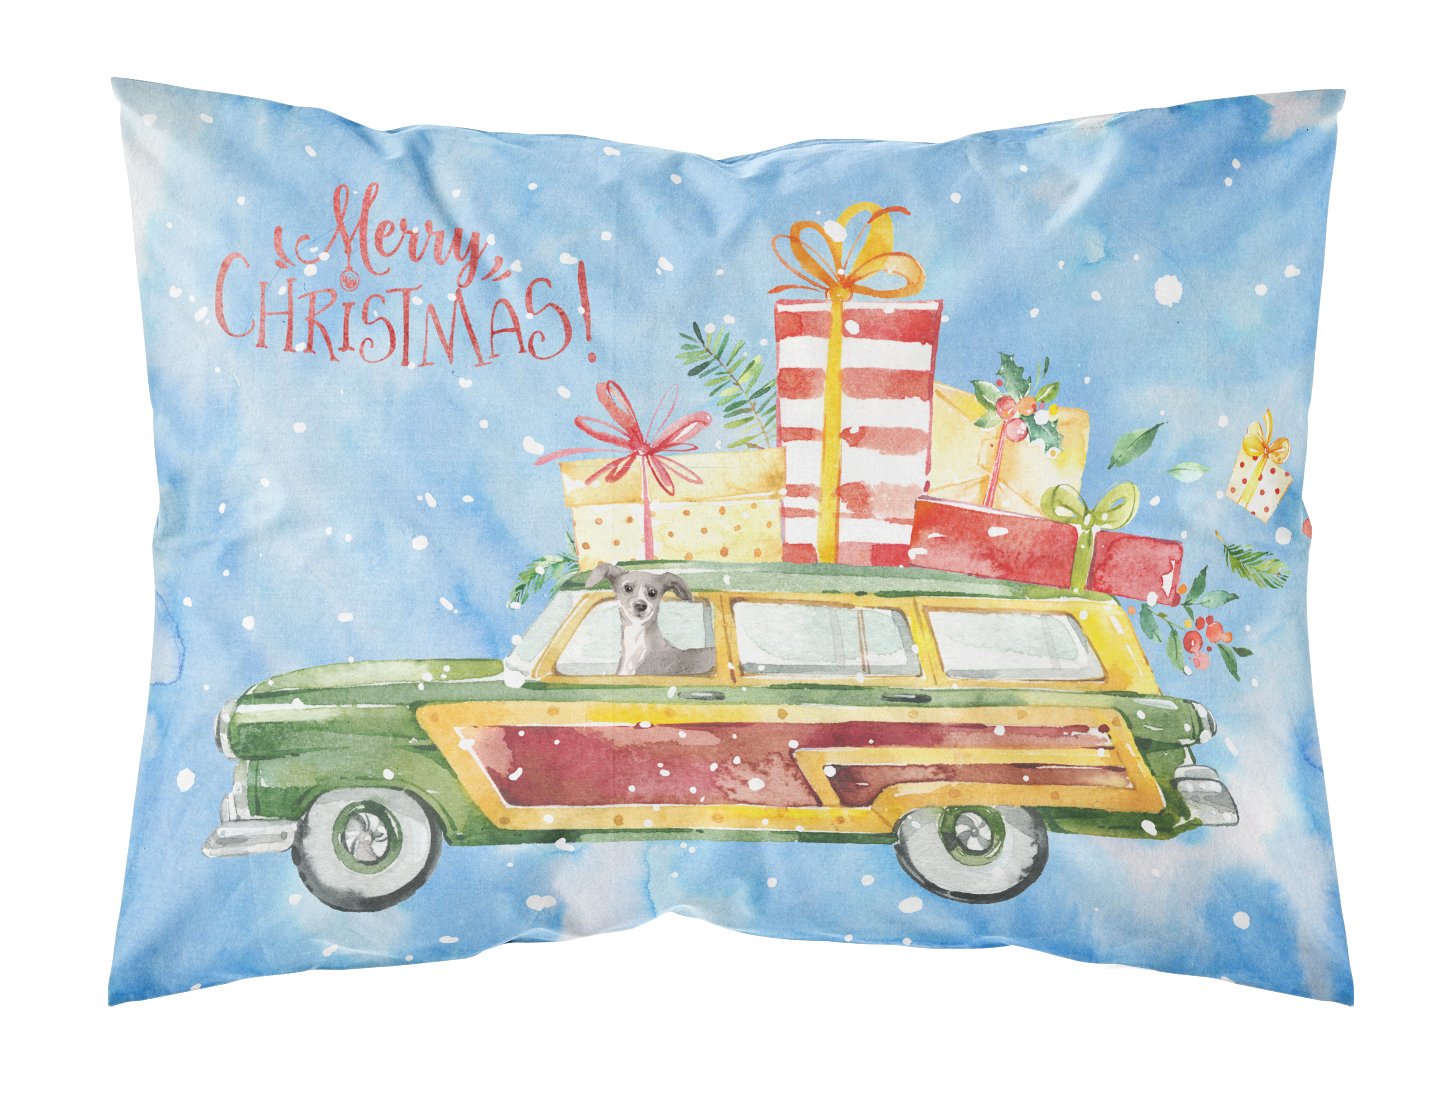 Merry Christmas Italian Greyhound Fabric Standard Pillowcase CK2458PILLOWCASE by Caroline's Treasures